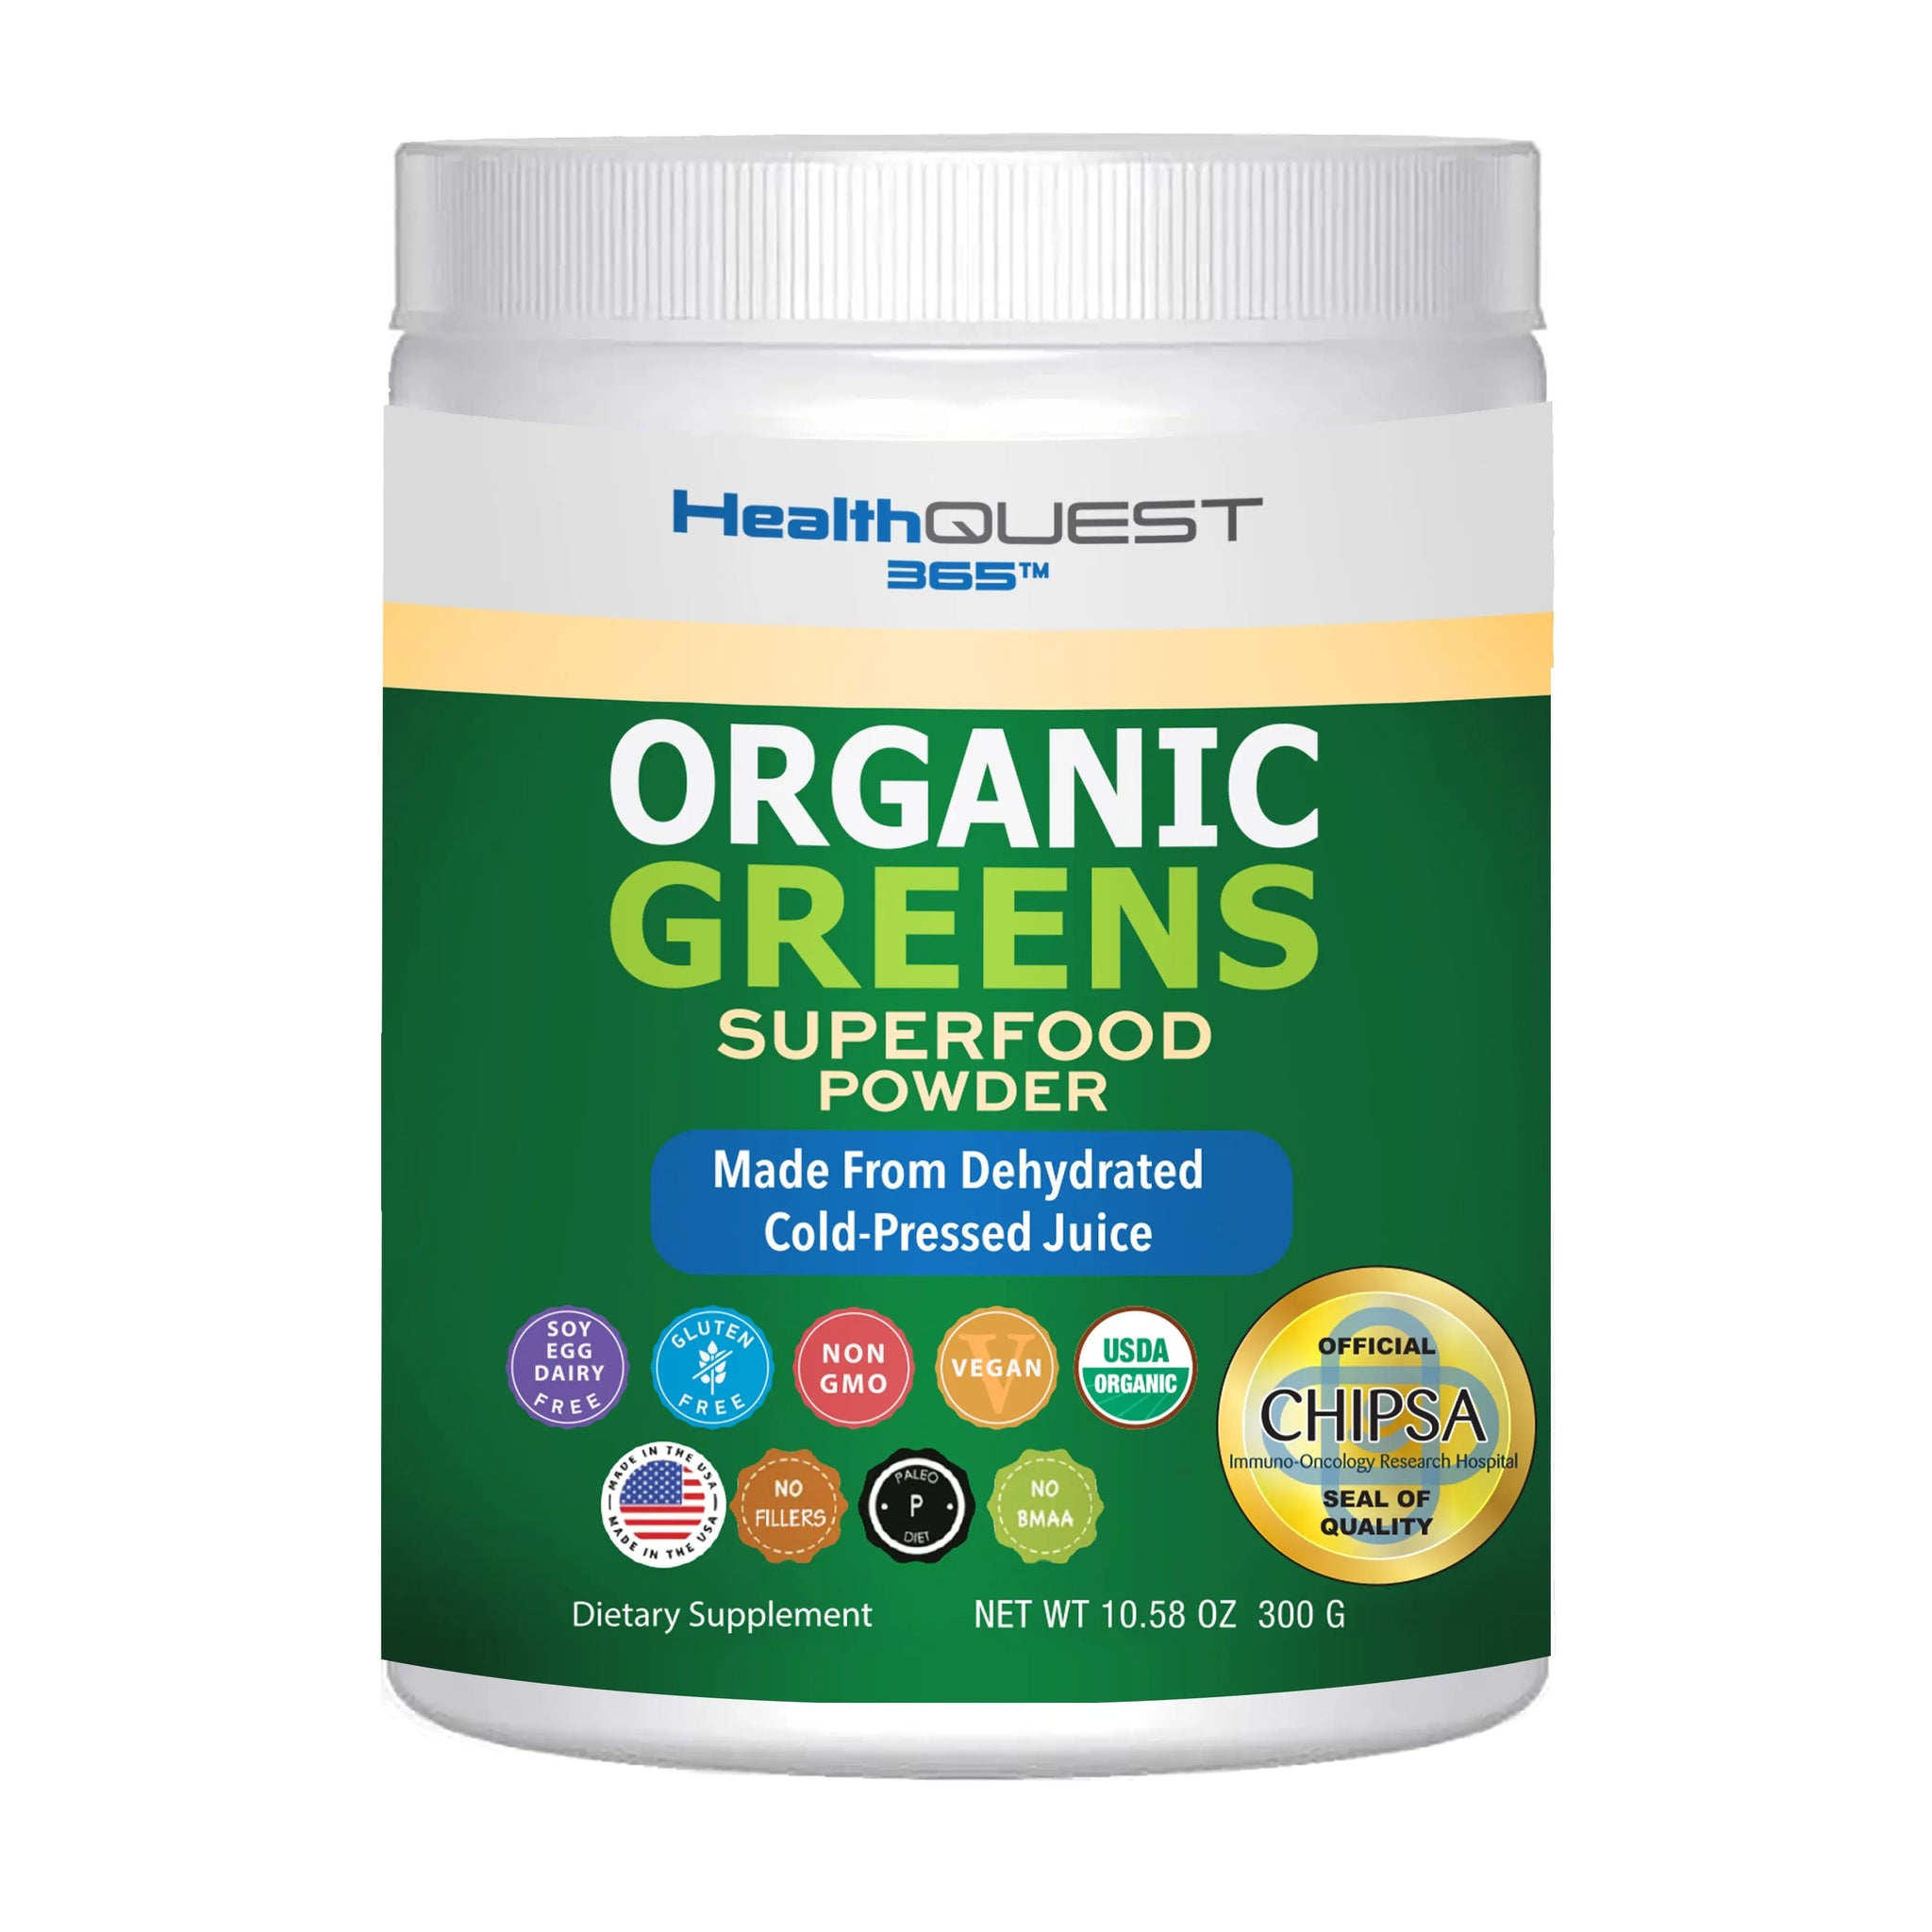 Organic Greens 365™: Best Organic Greens - Health Quest 365